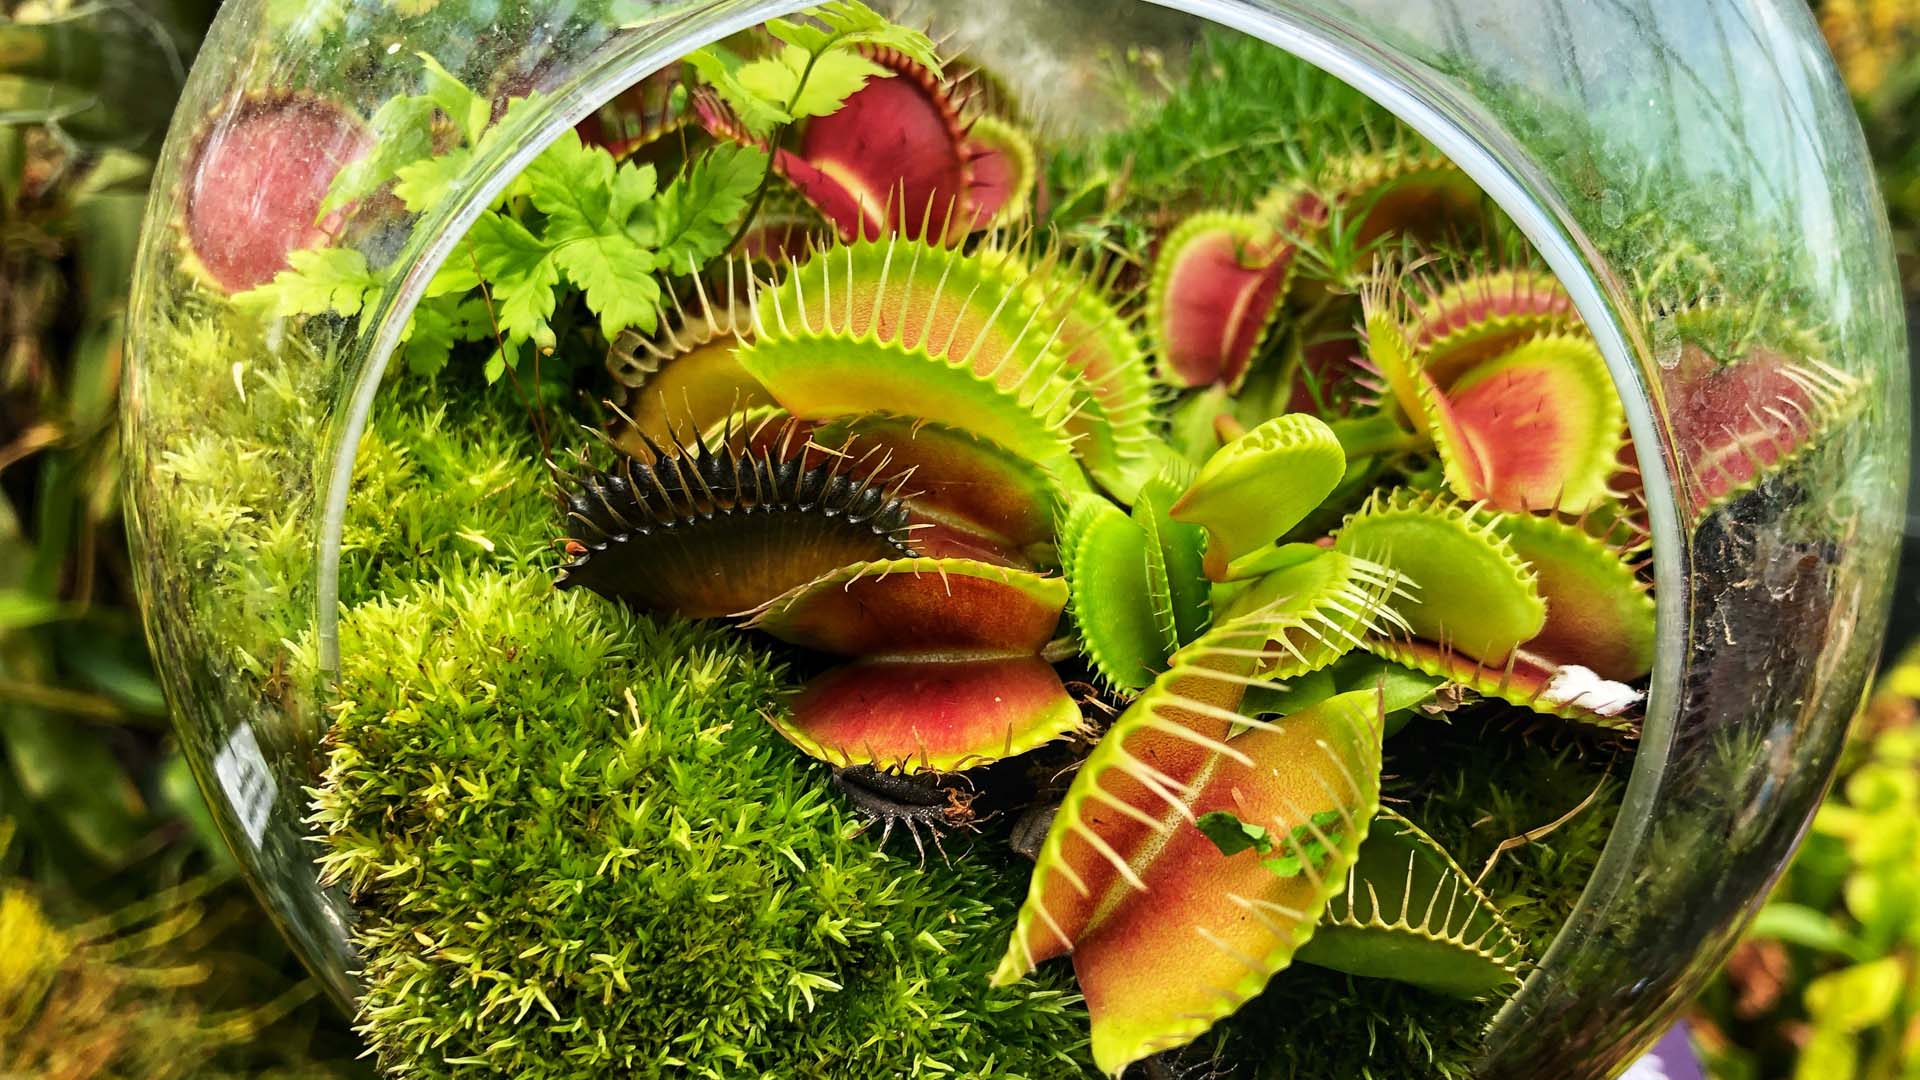 Venus fly trap plant, displayed in a glass terrarium